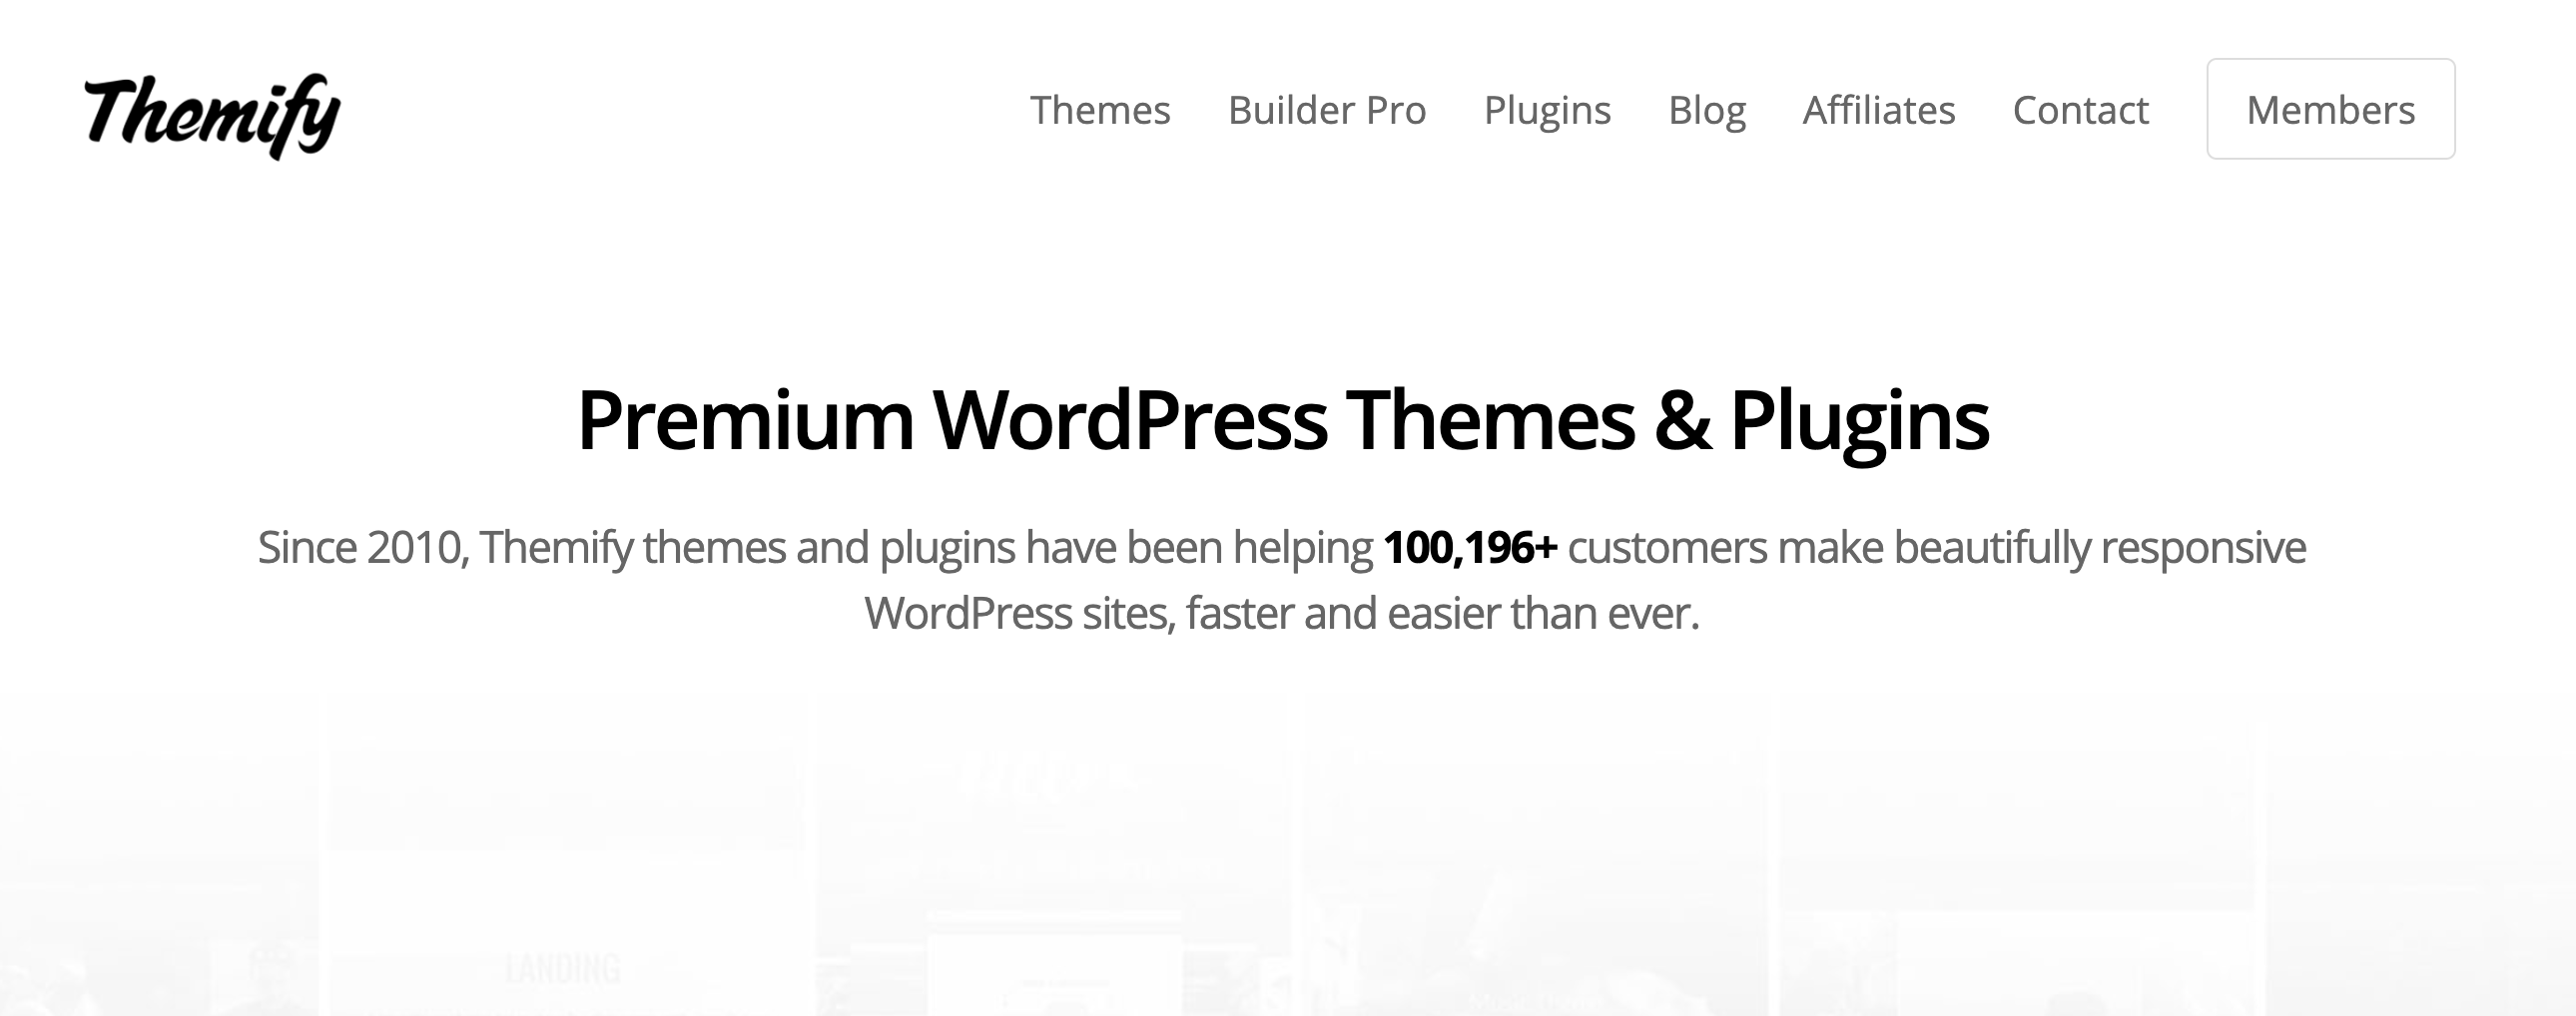 Themify Premium WordPress Themes & Plugins